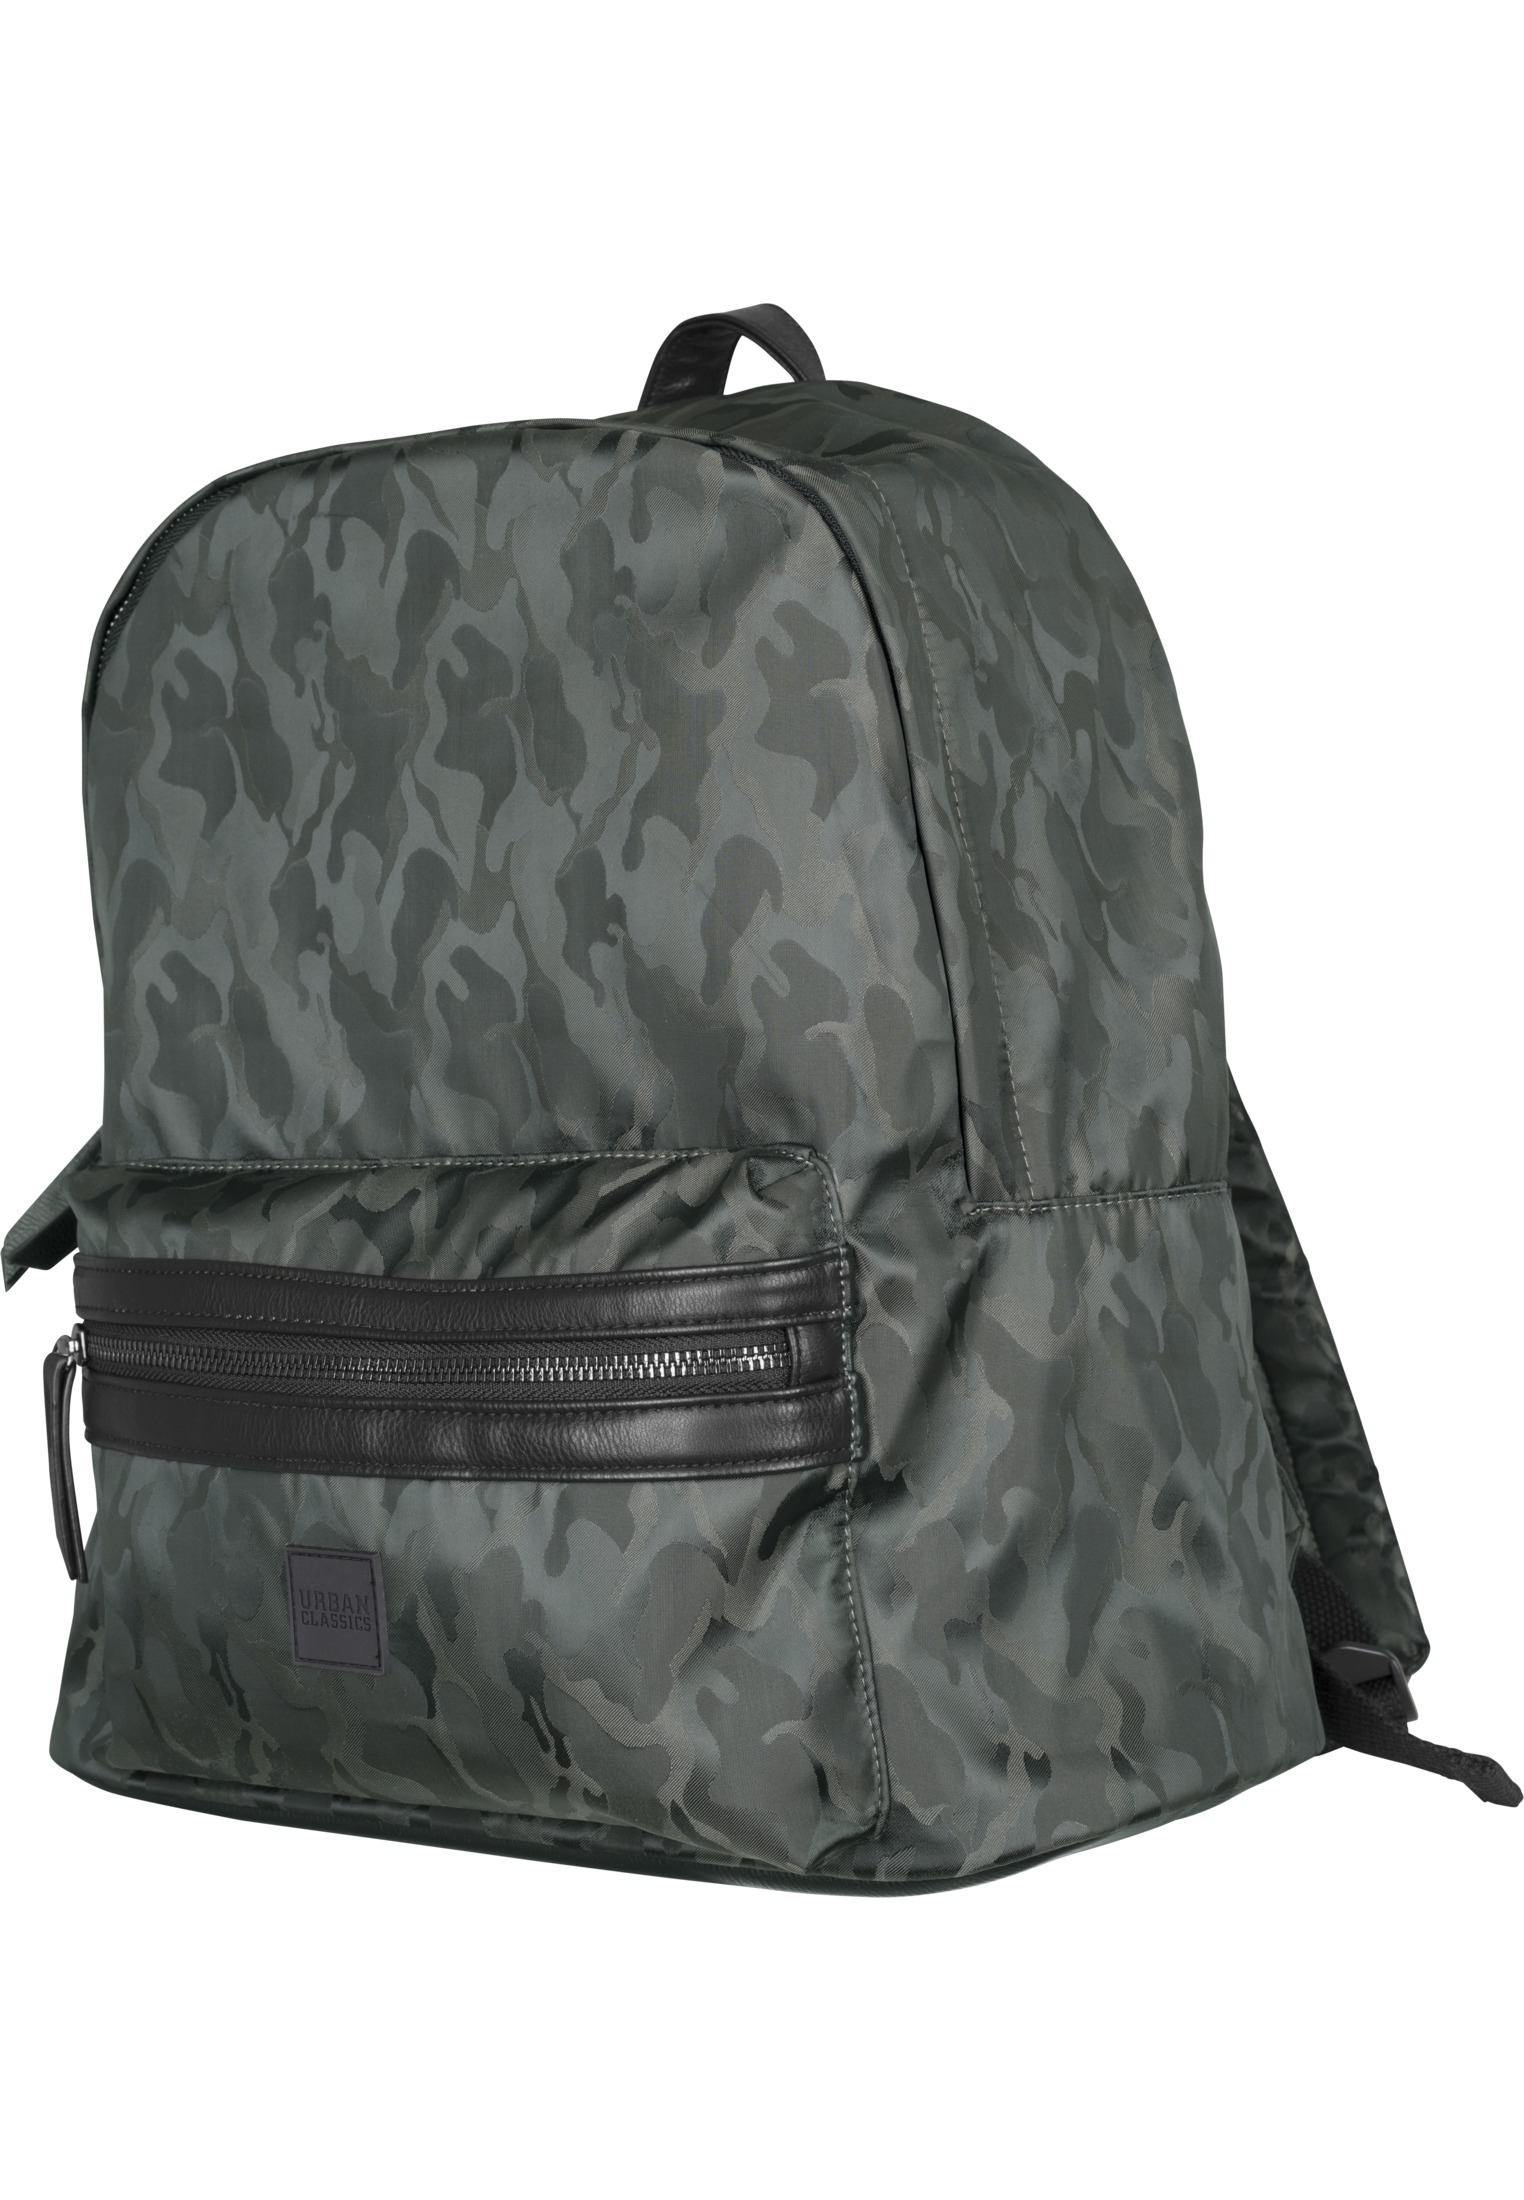 Taschen Camo Jacquard Backpack in Farbe dark olive camo